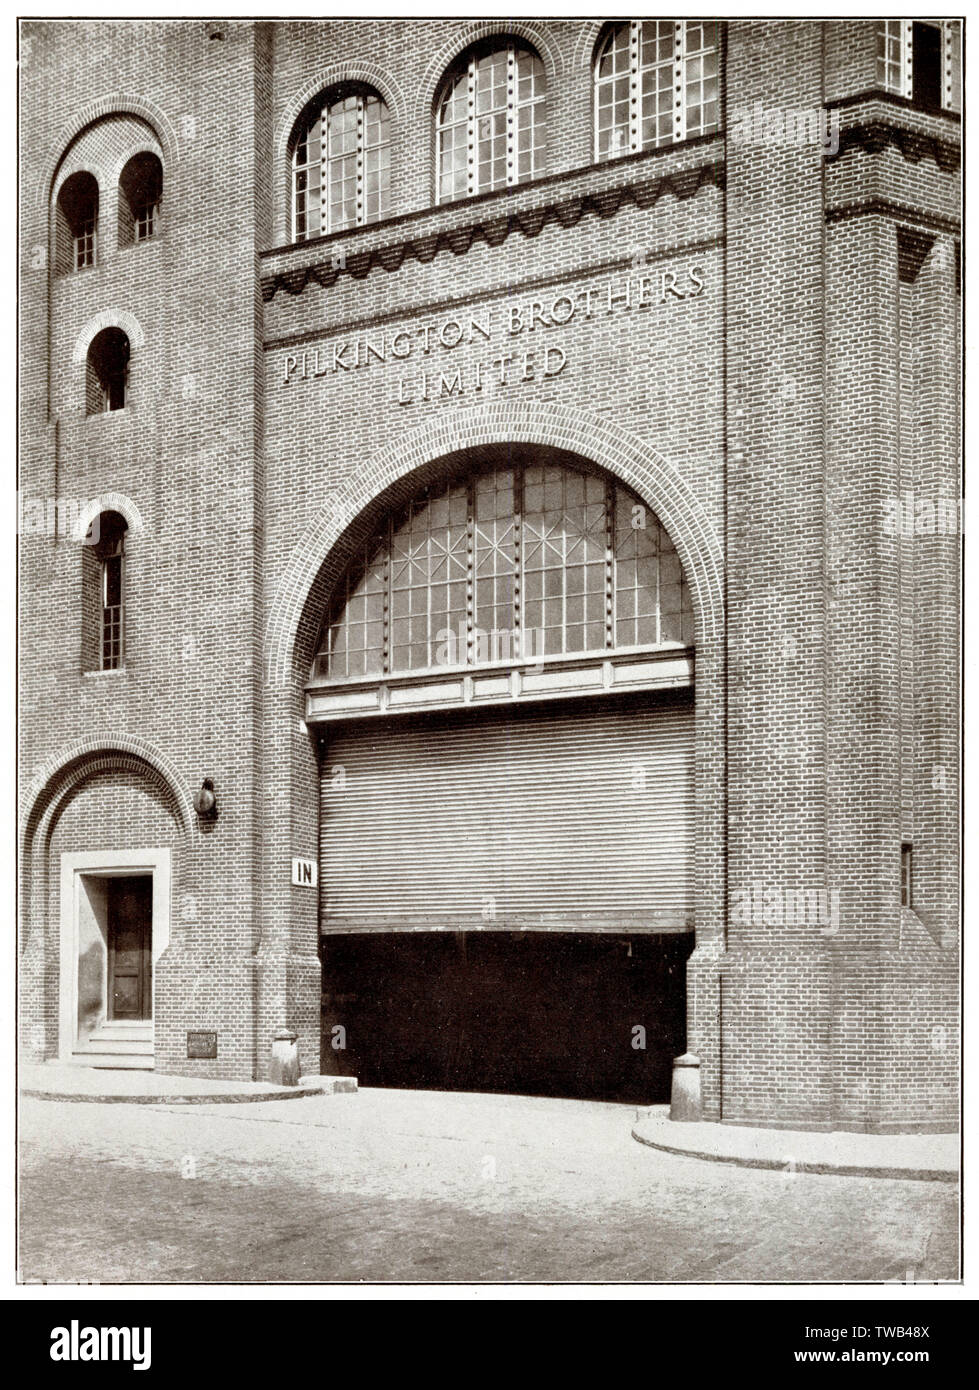 Entrance to Loading Dock, Pilkington Ltd, North London Stock Photo